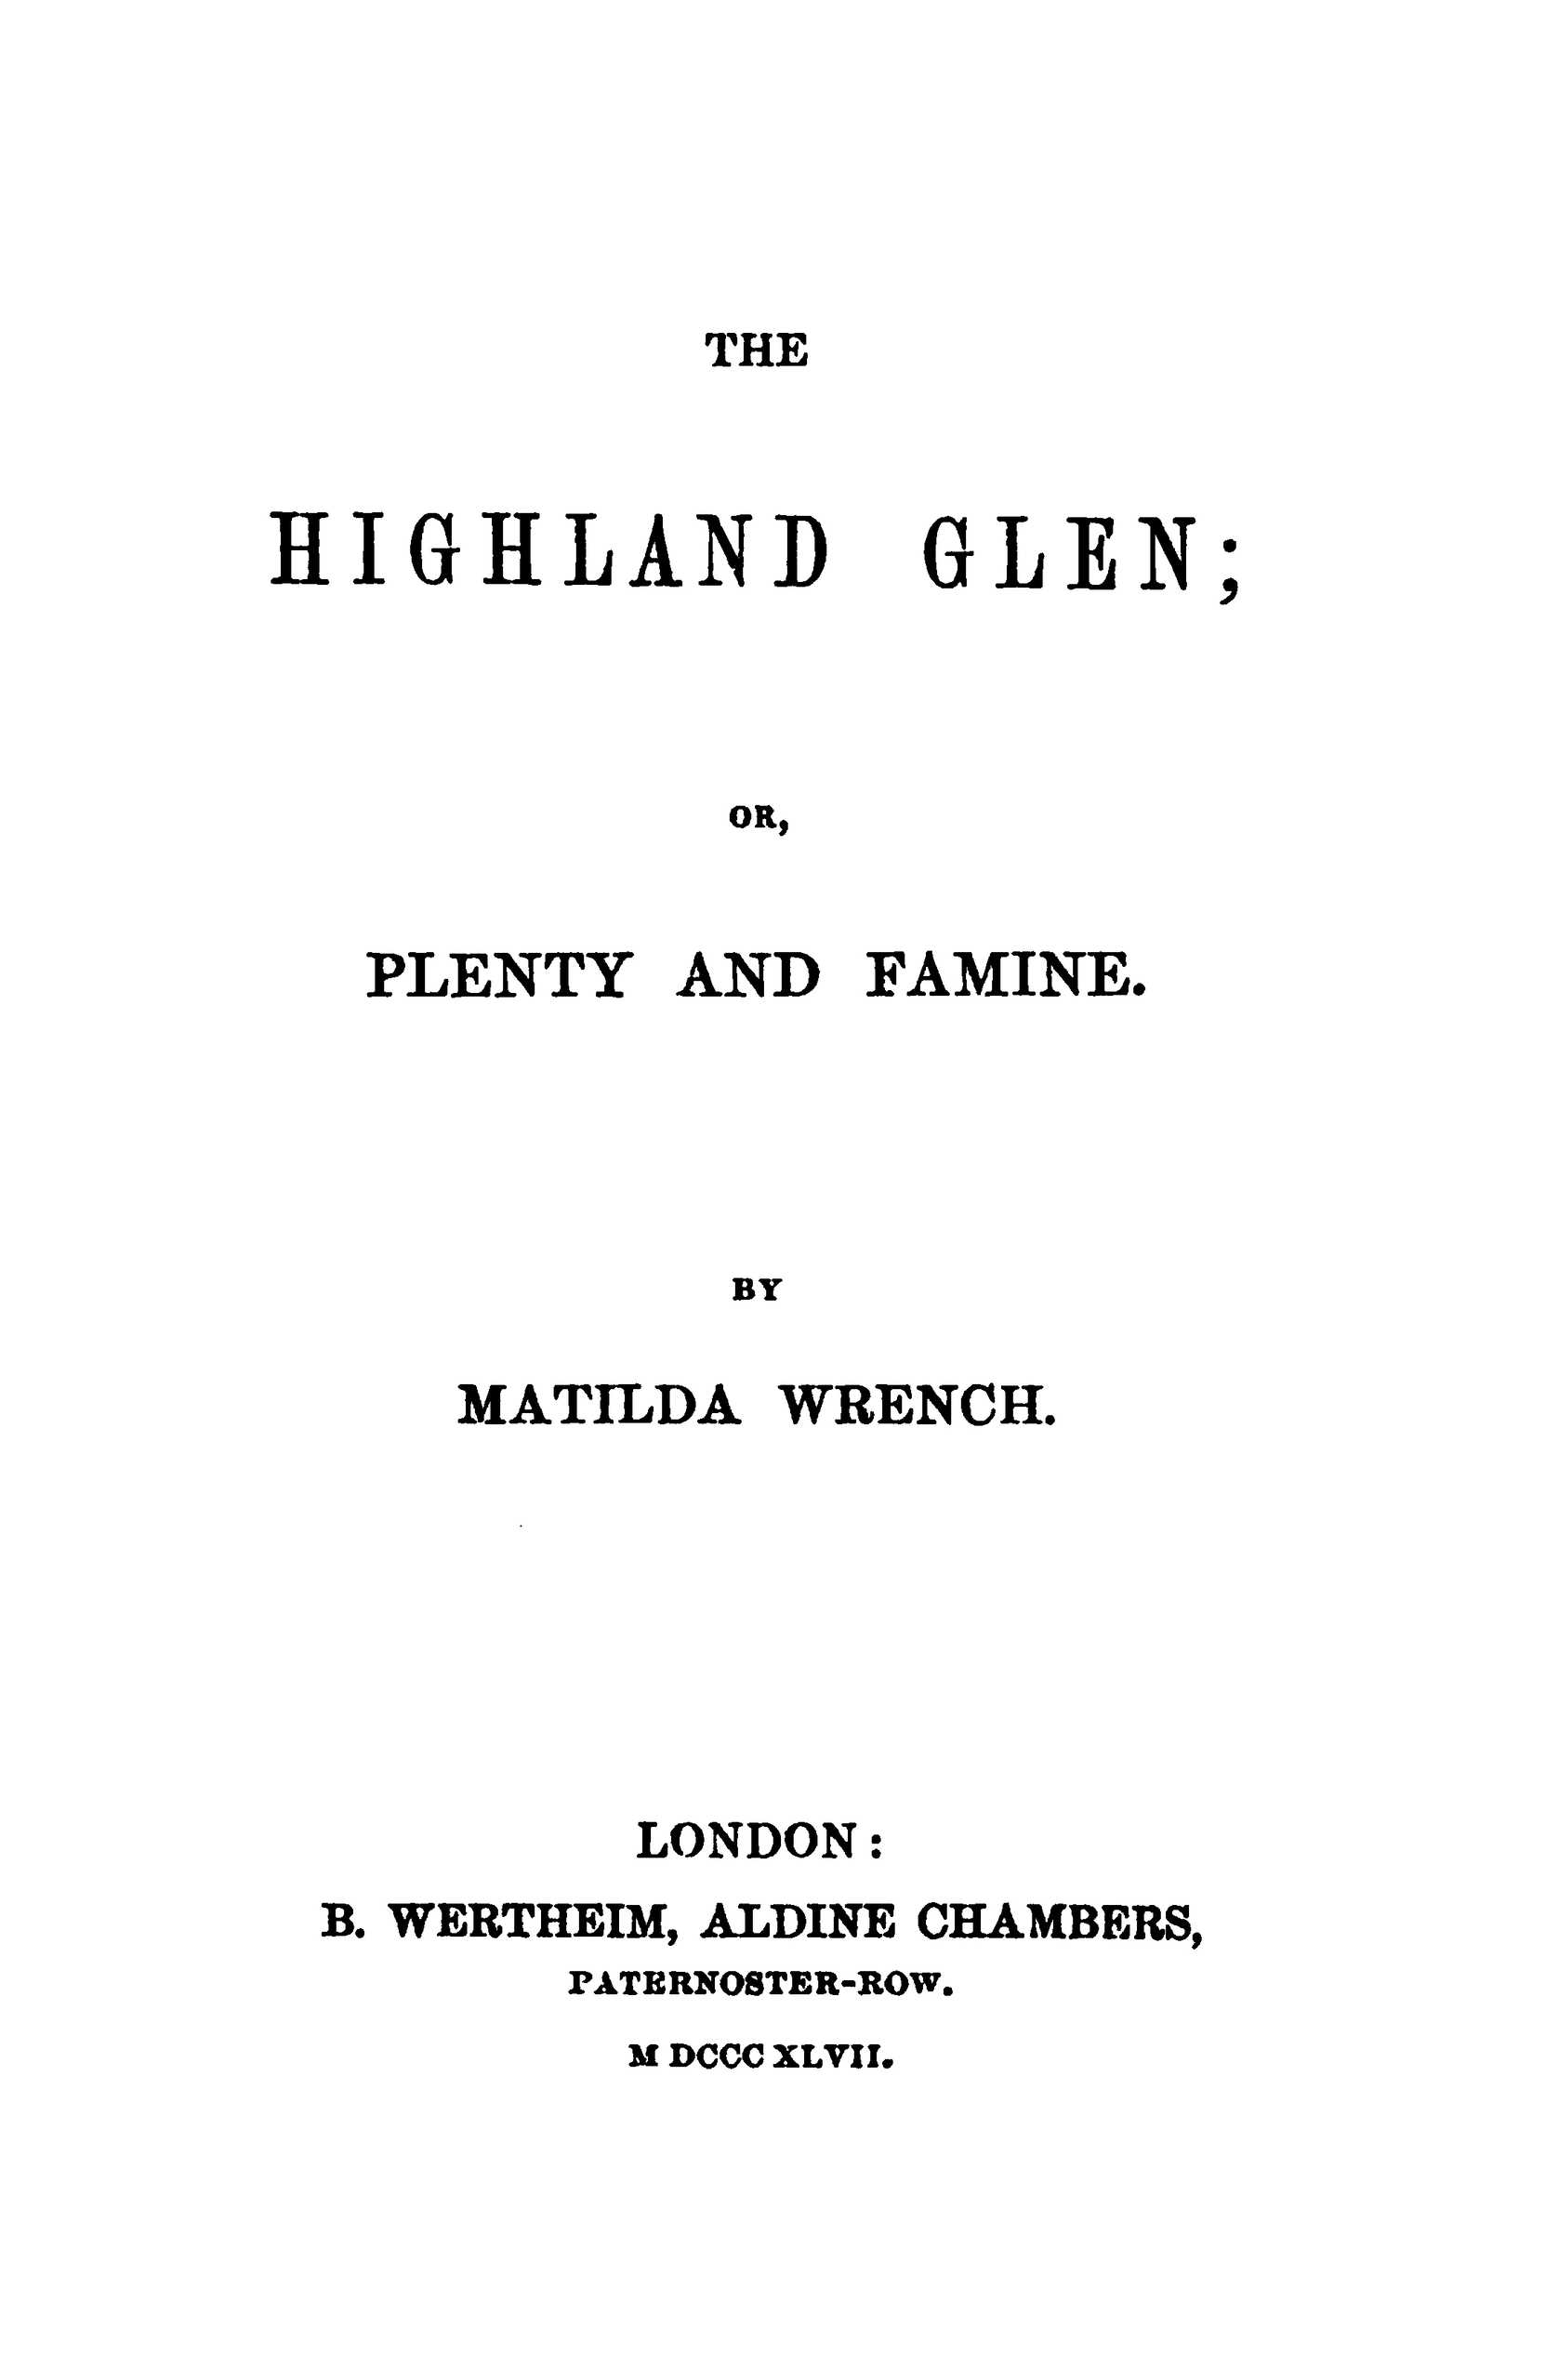 The Highland glen